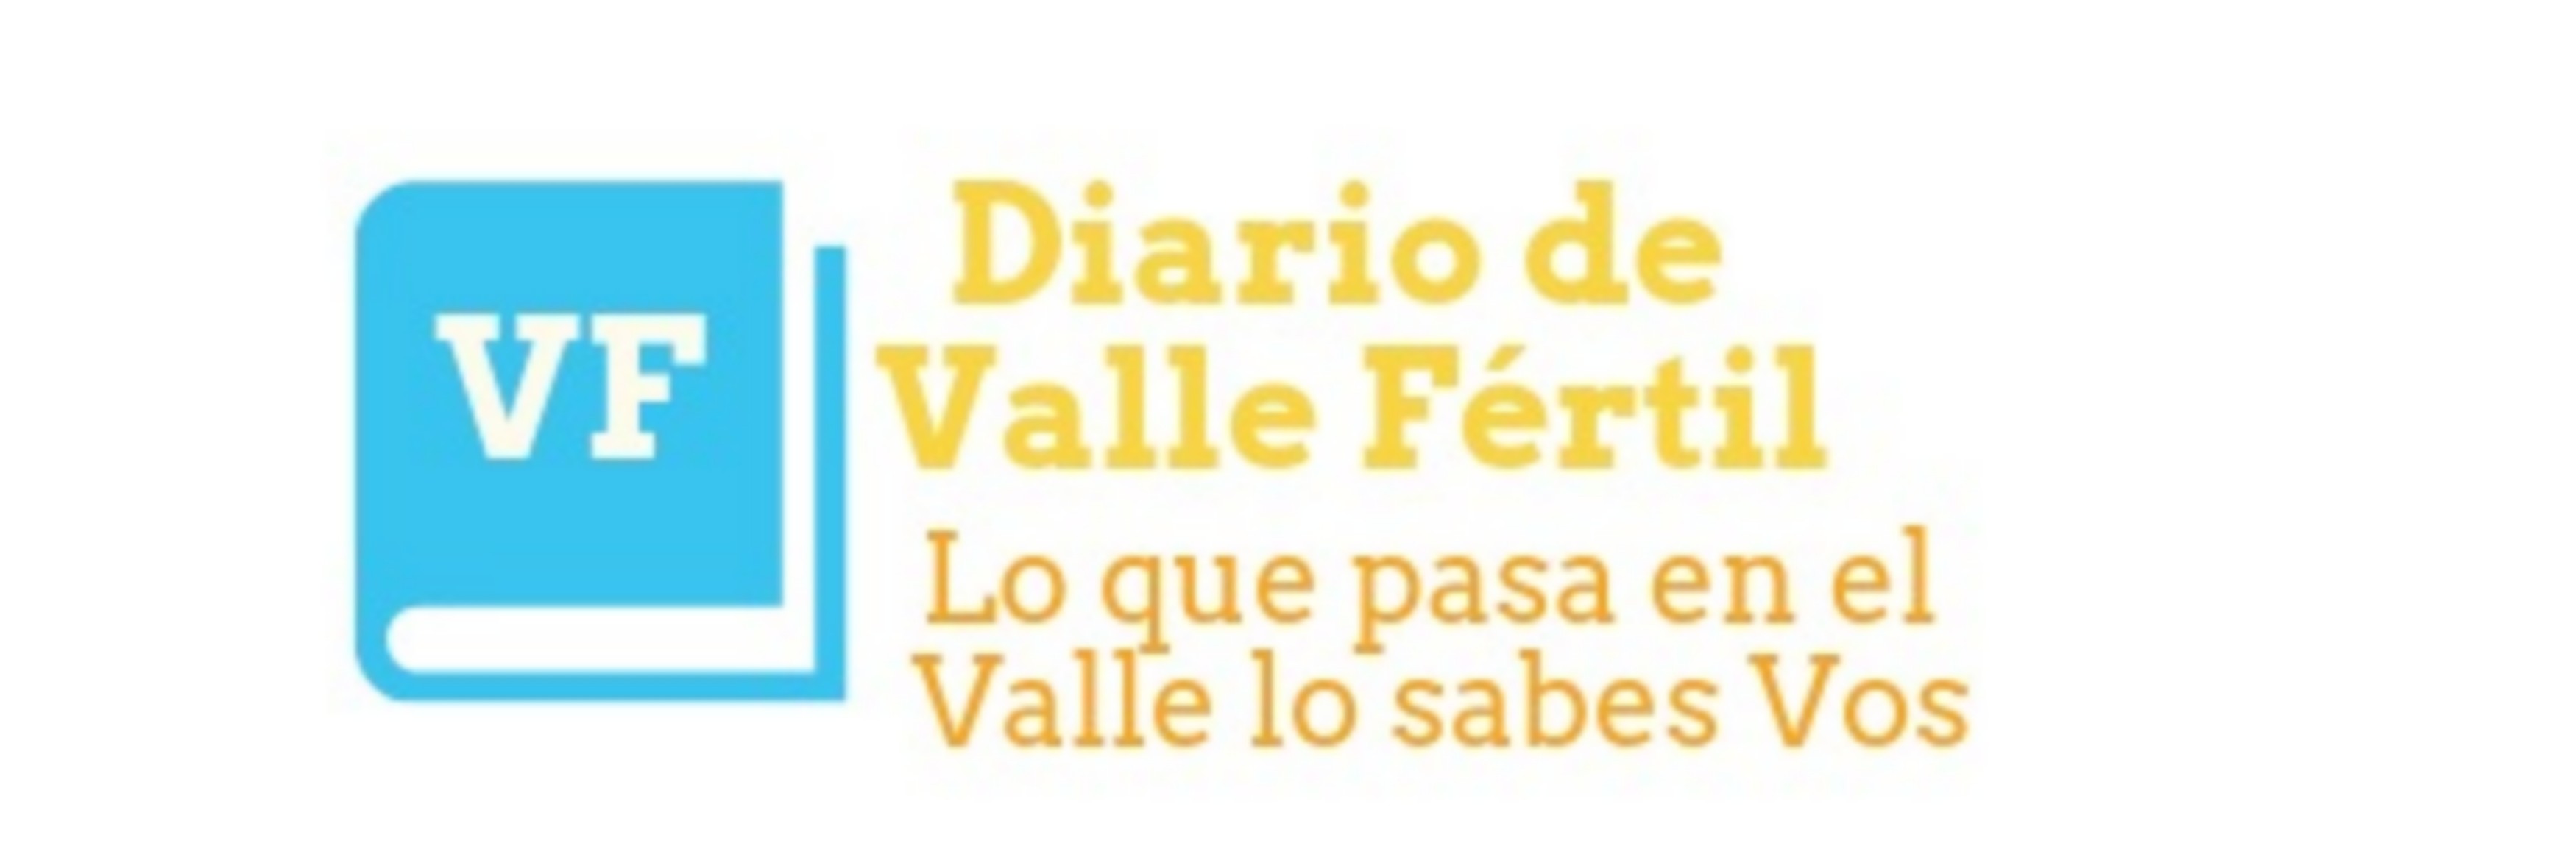 diario de Valle Fertil